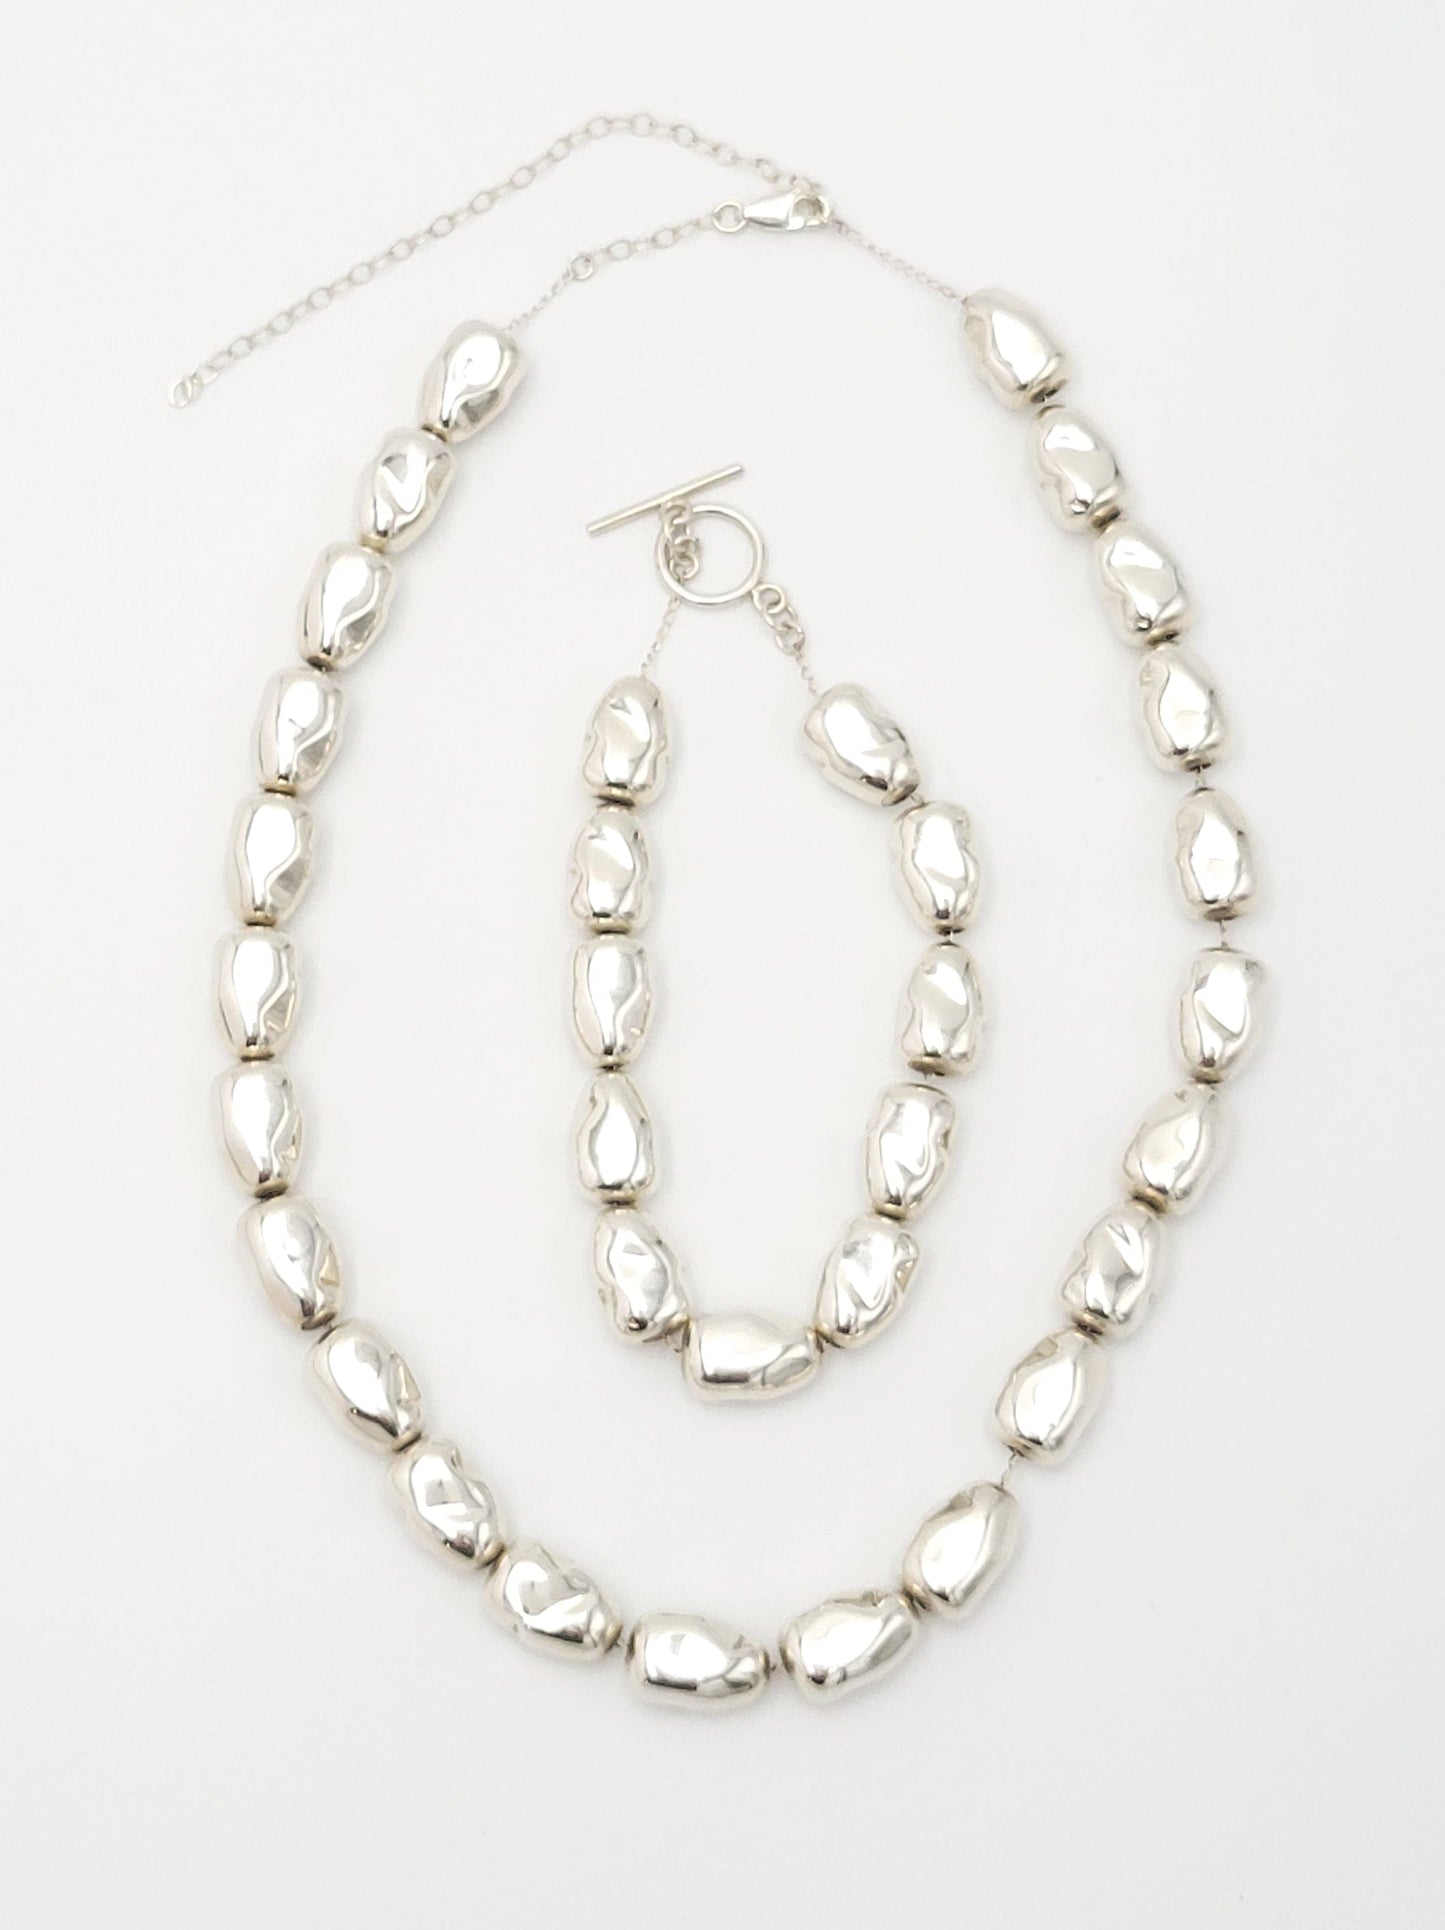 Sunstone Imports Jewelry Designer Sterling Silver Modernist Rock Candy Beads Necklace & Bracelet Set